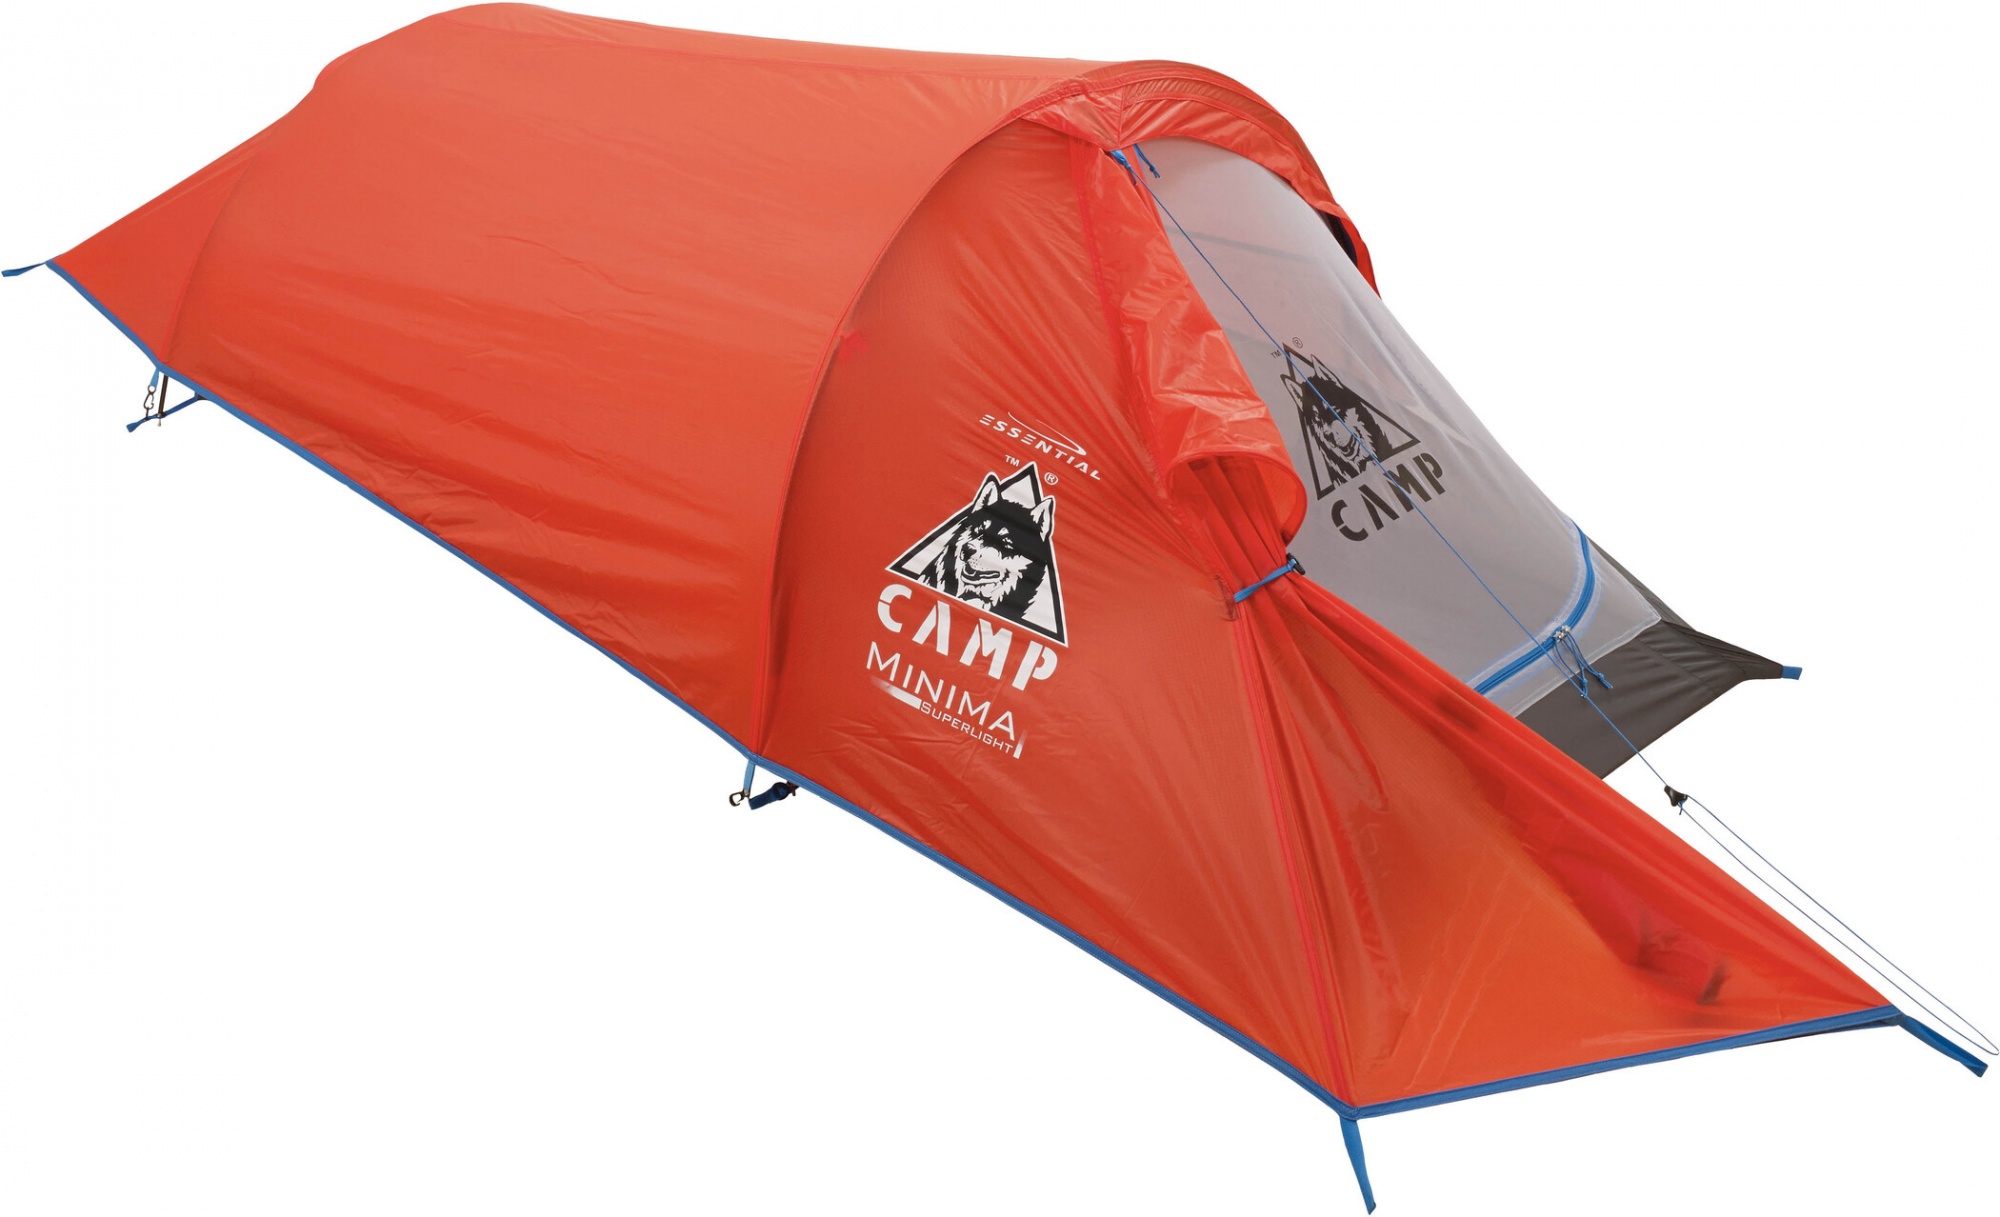 Одноместная палатка. Палатка Camp minima 3 SL. Палатка Camp minima 1. Палатка атеми Tonga 2tx 1,9кг. Палатка пирамида одноместная.